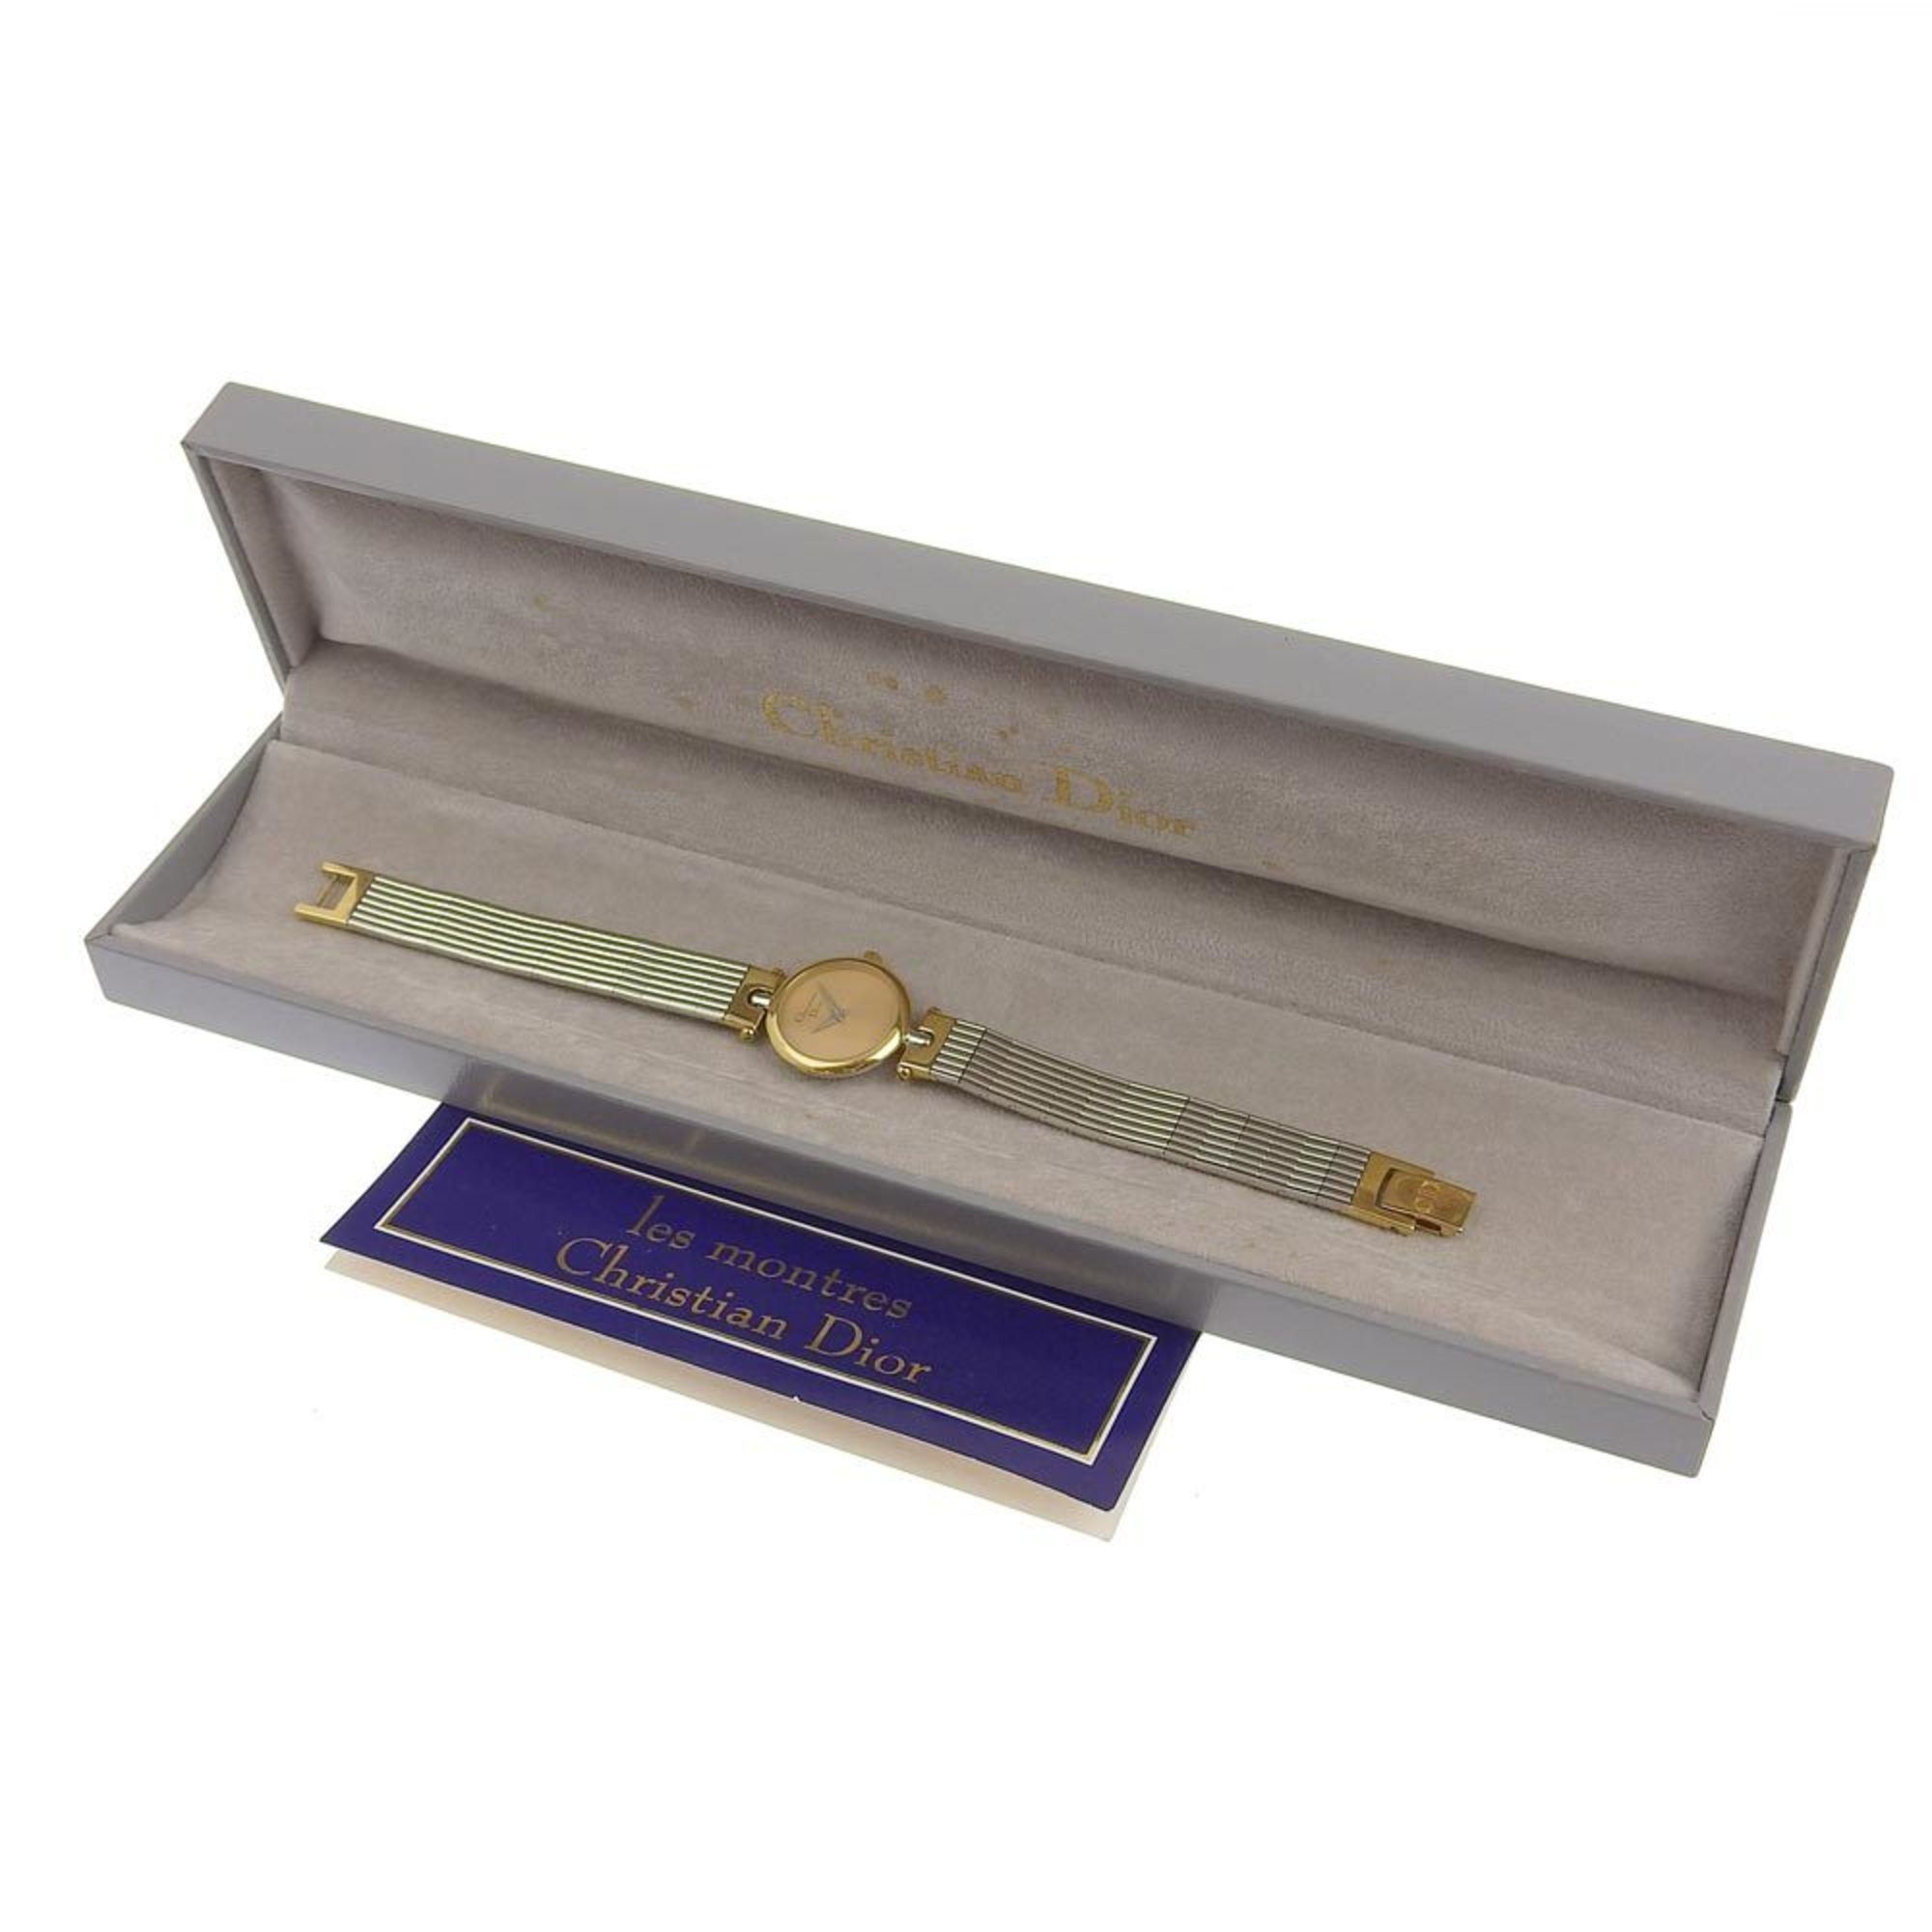 Christian Dior CHRISTIAN DIOR Lady's quartz battery watch gold dial 3025